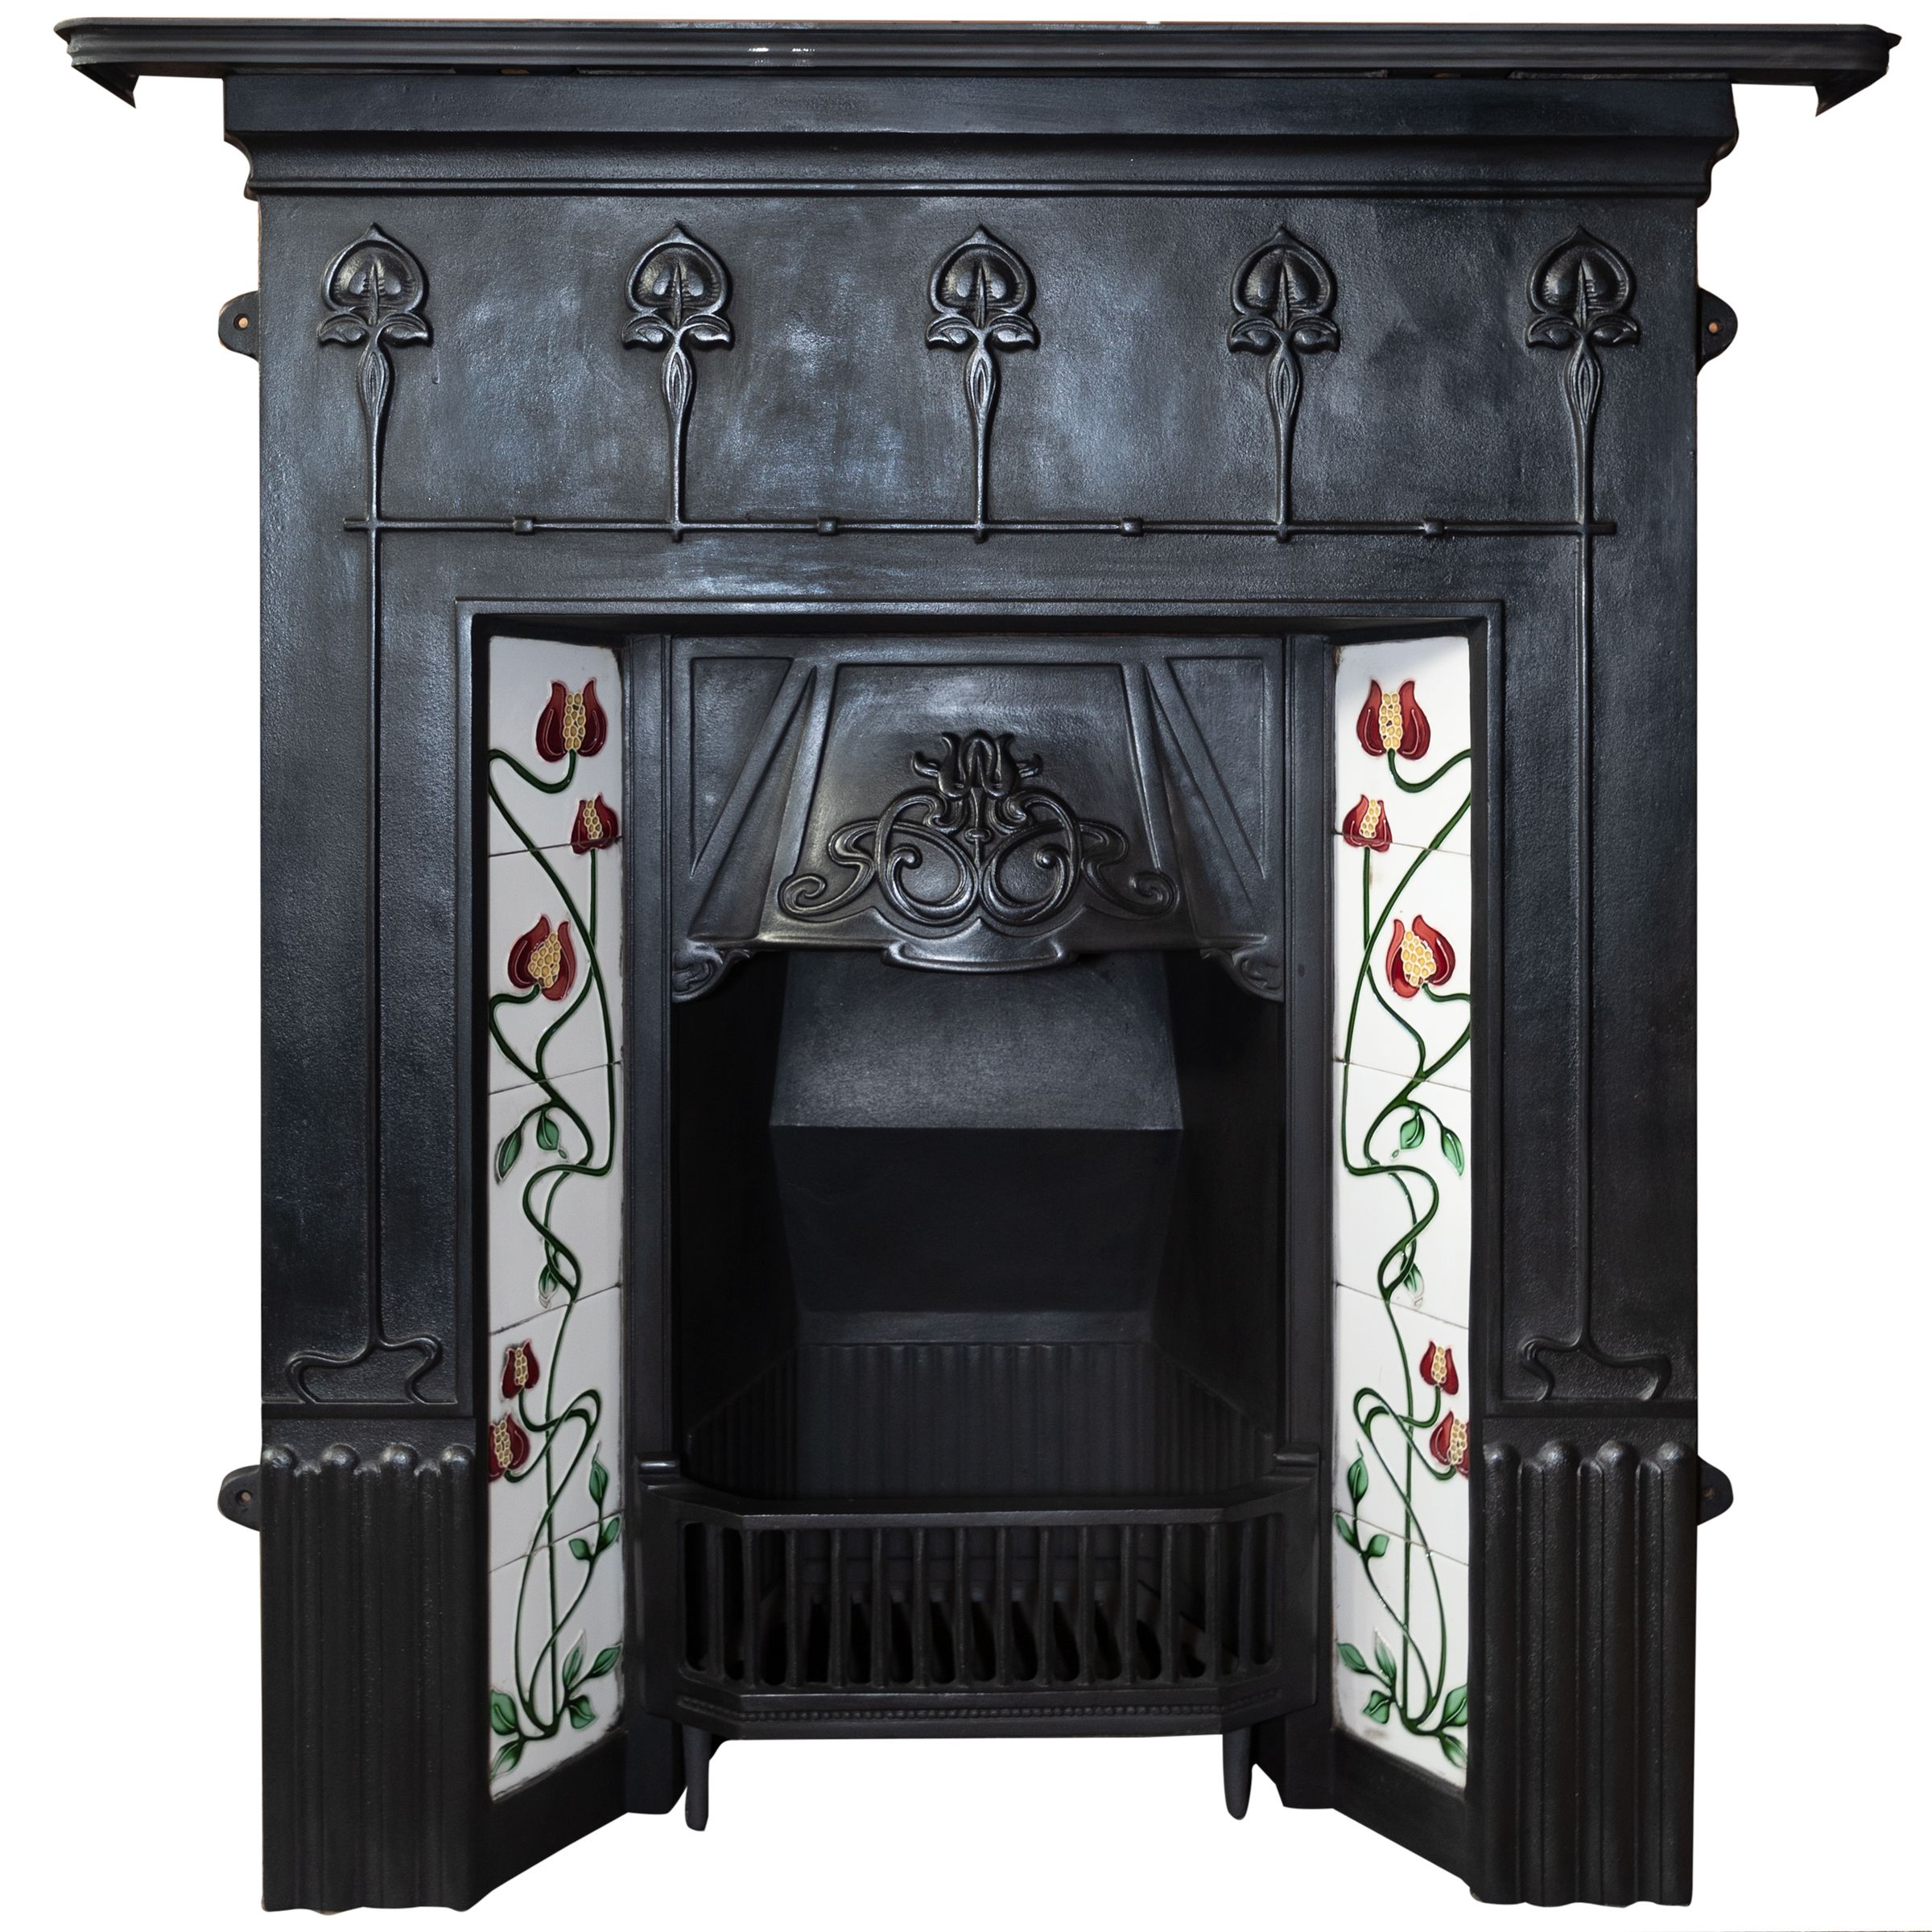 Antique Cast Iron Fireplace Inspirational Huge Selection Of Antique Cast Iron Fireplaces Fully